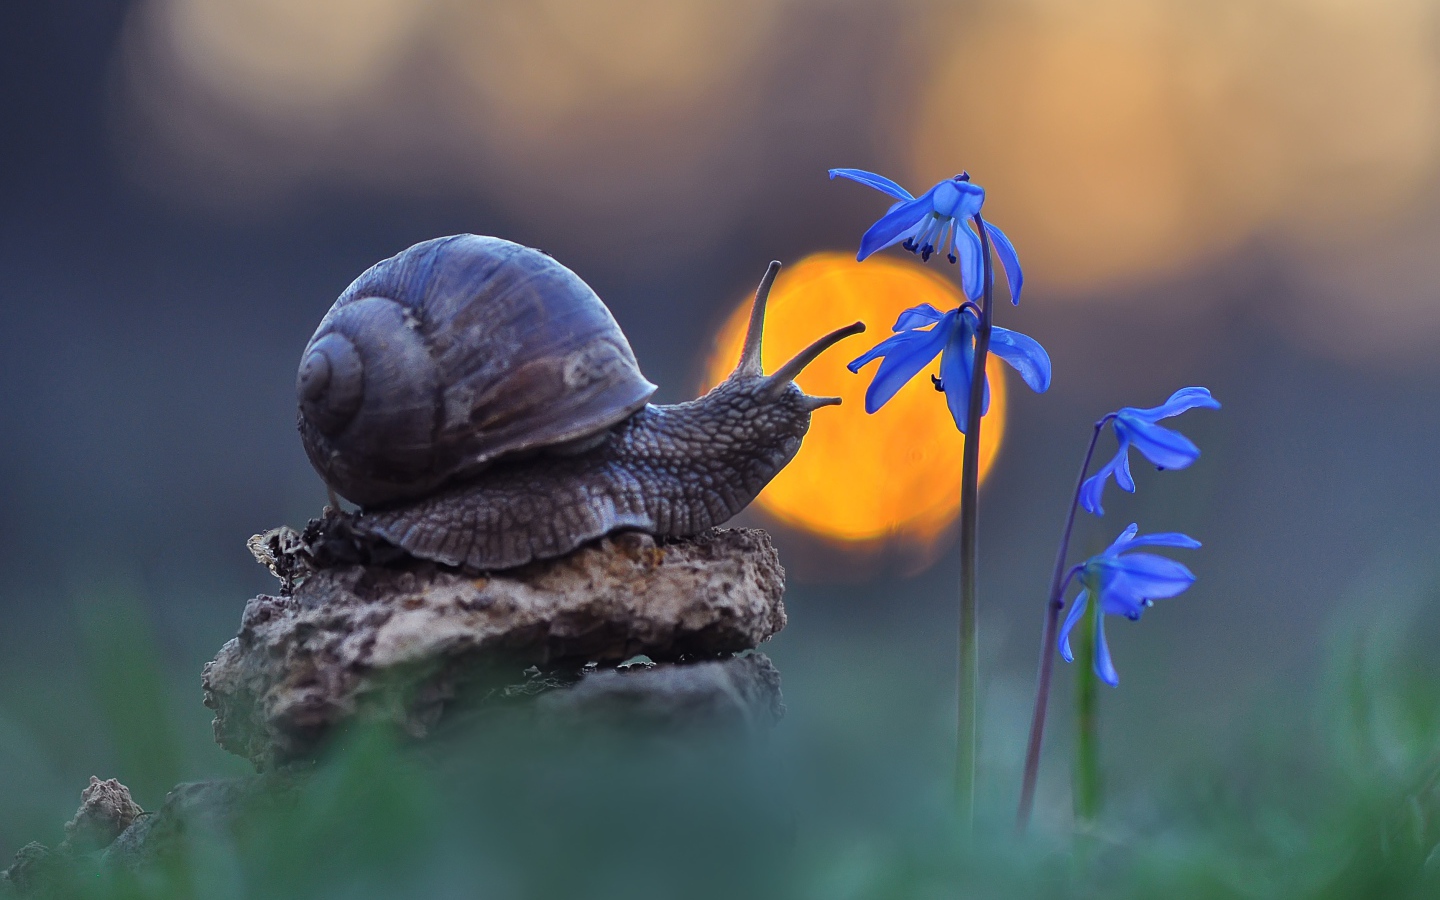 Snail sits on a stone near a blue flower